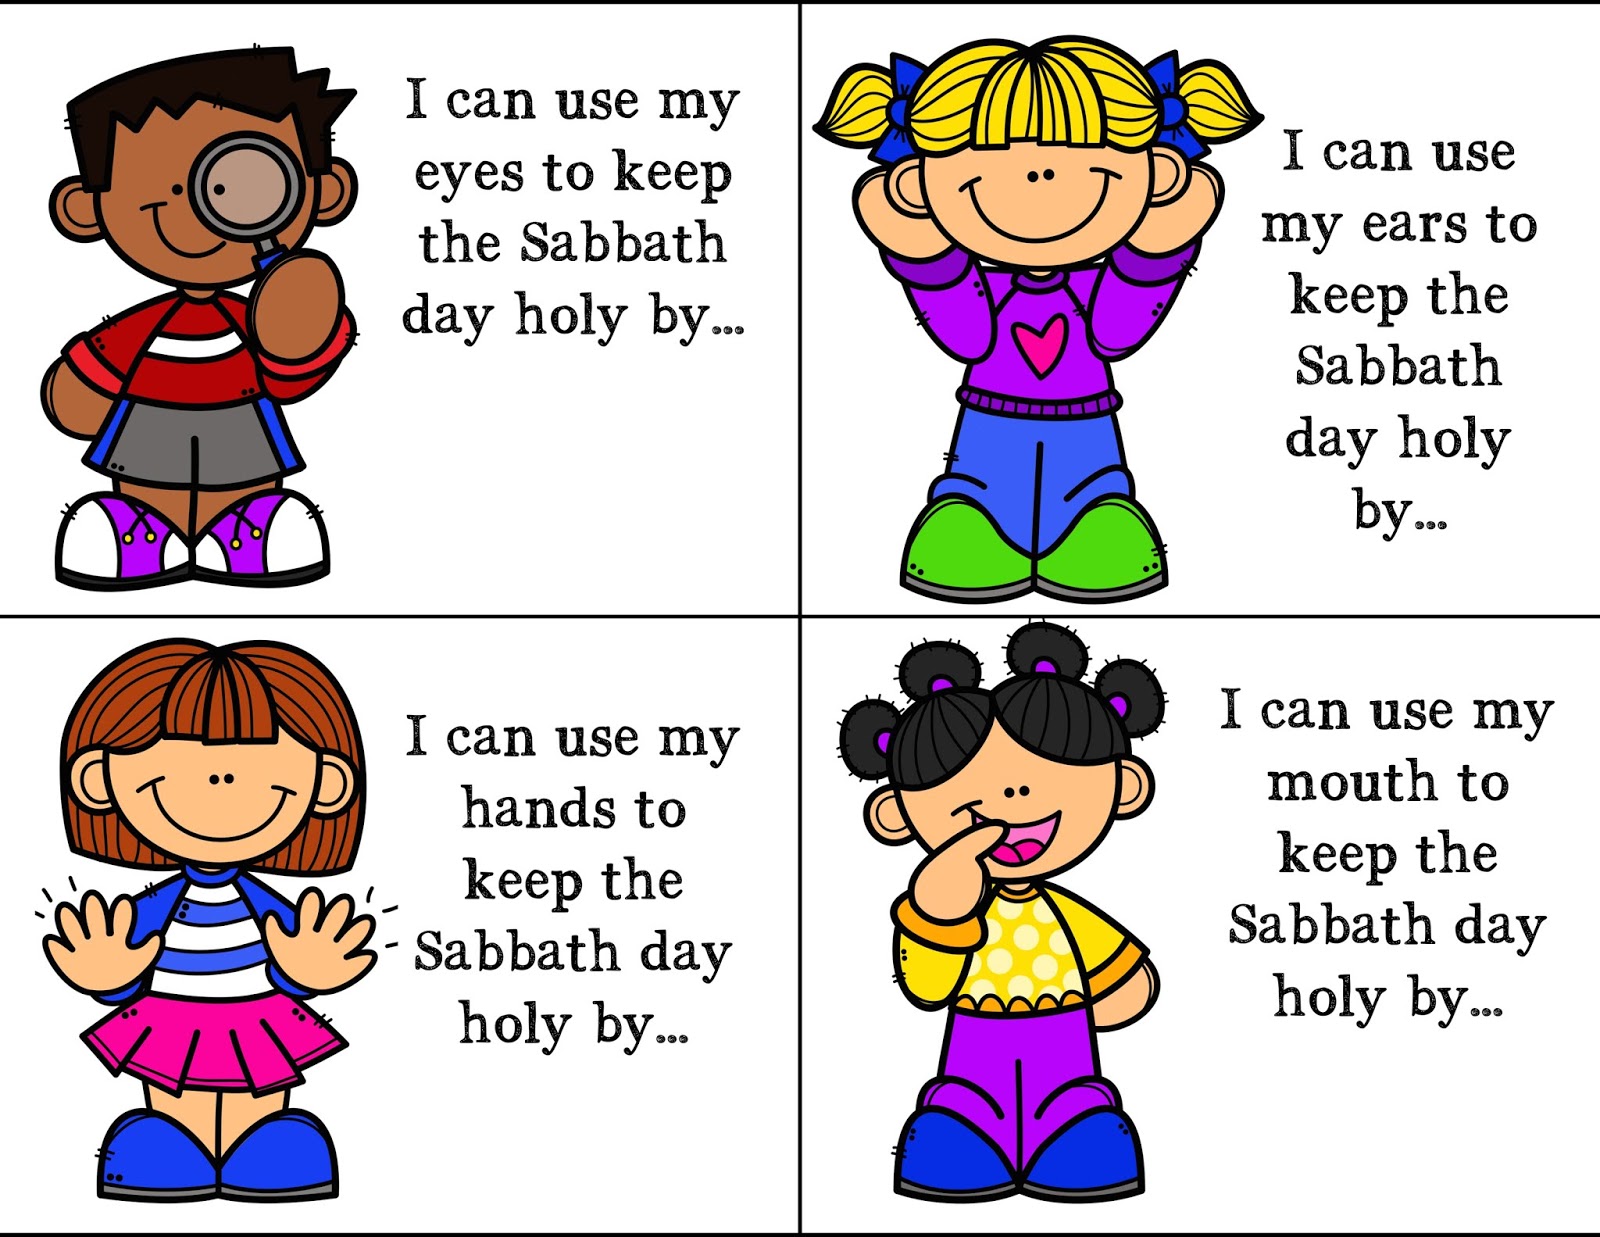 can i do homework on the sabbath